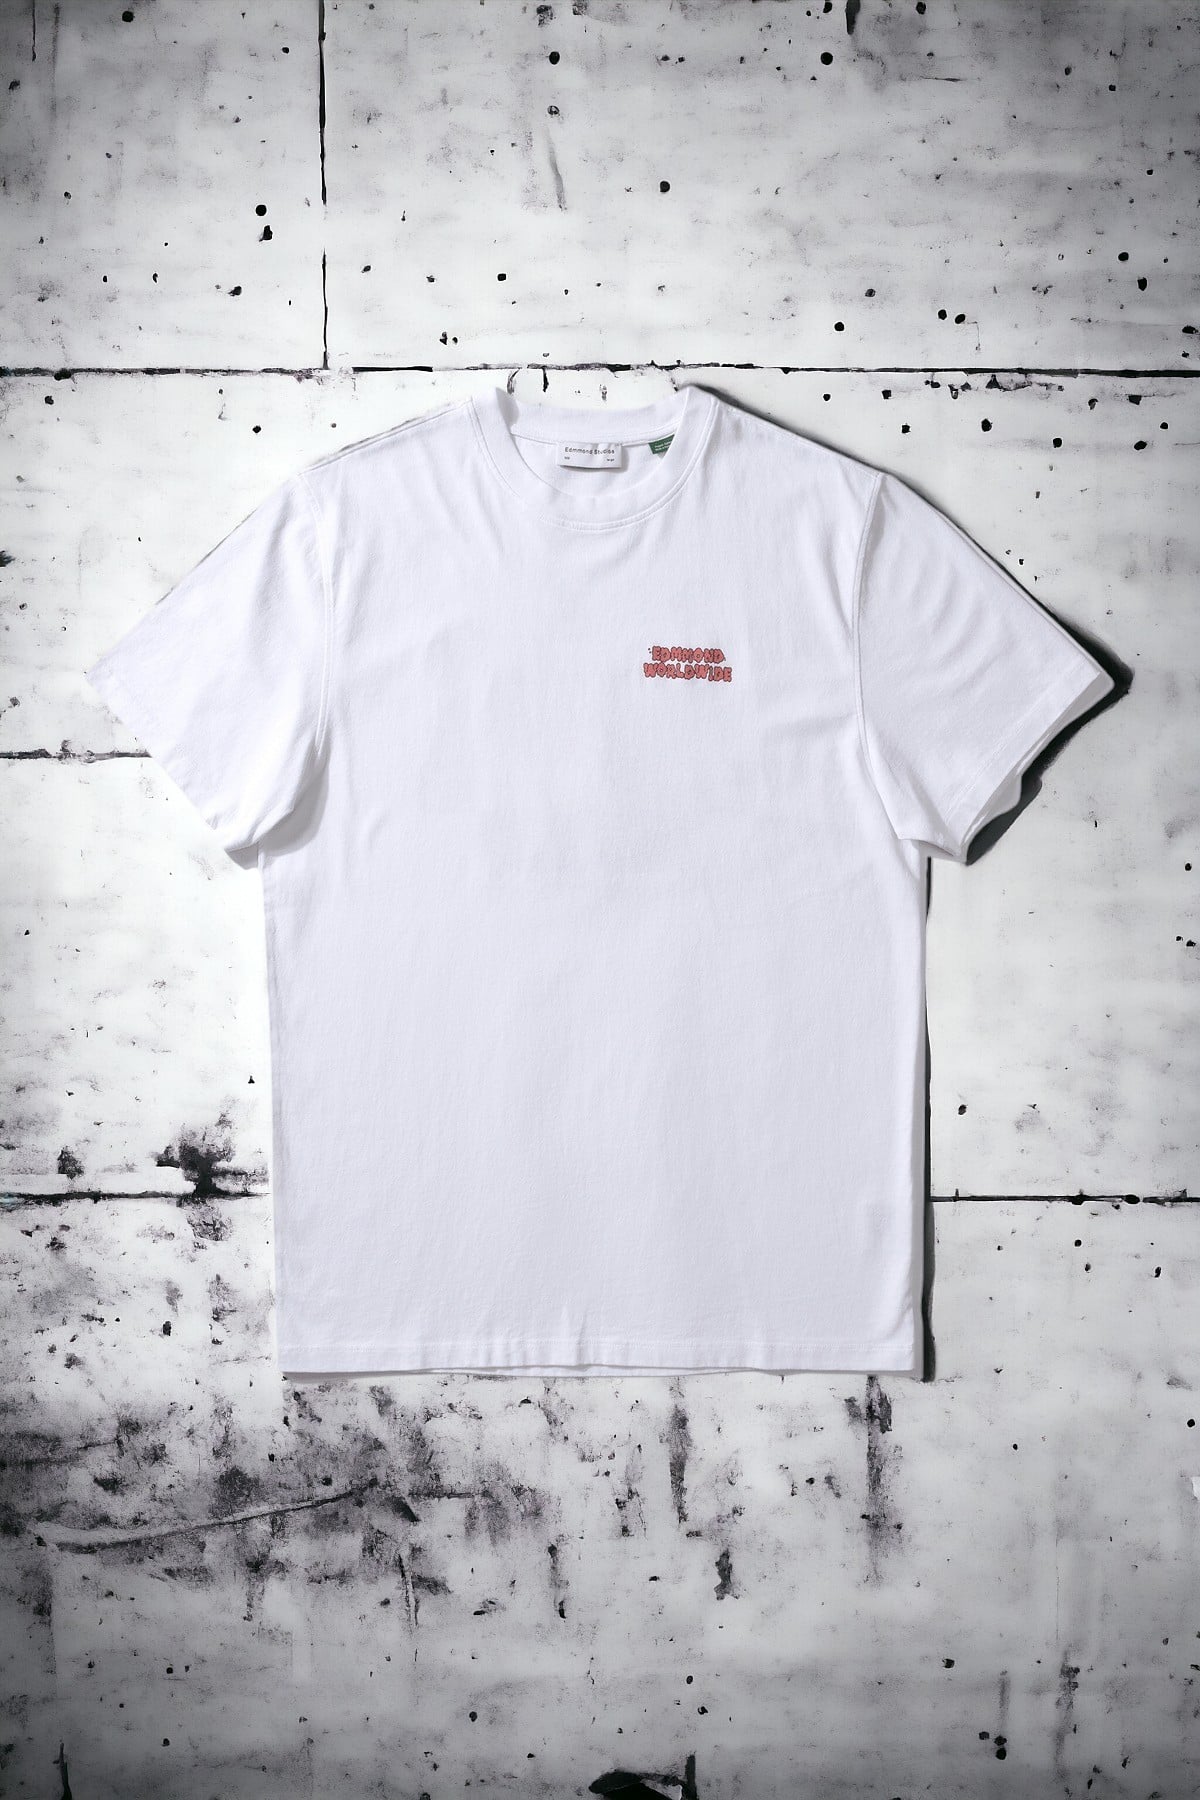 Camiseta Yaggo plain white